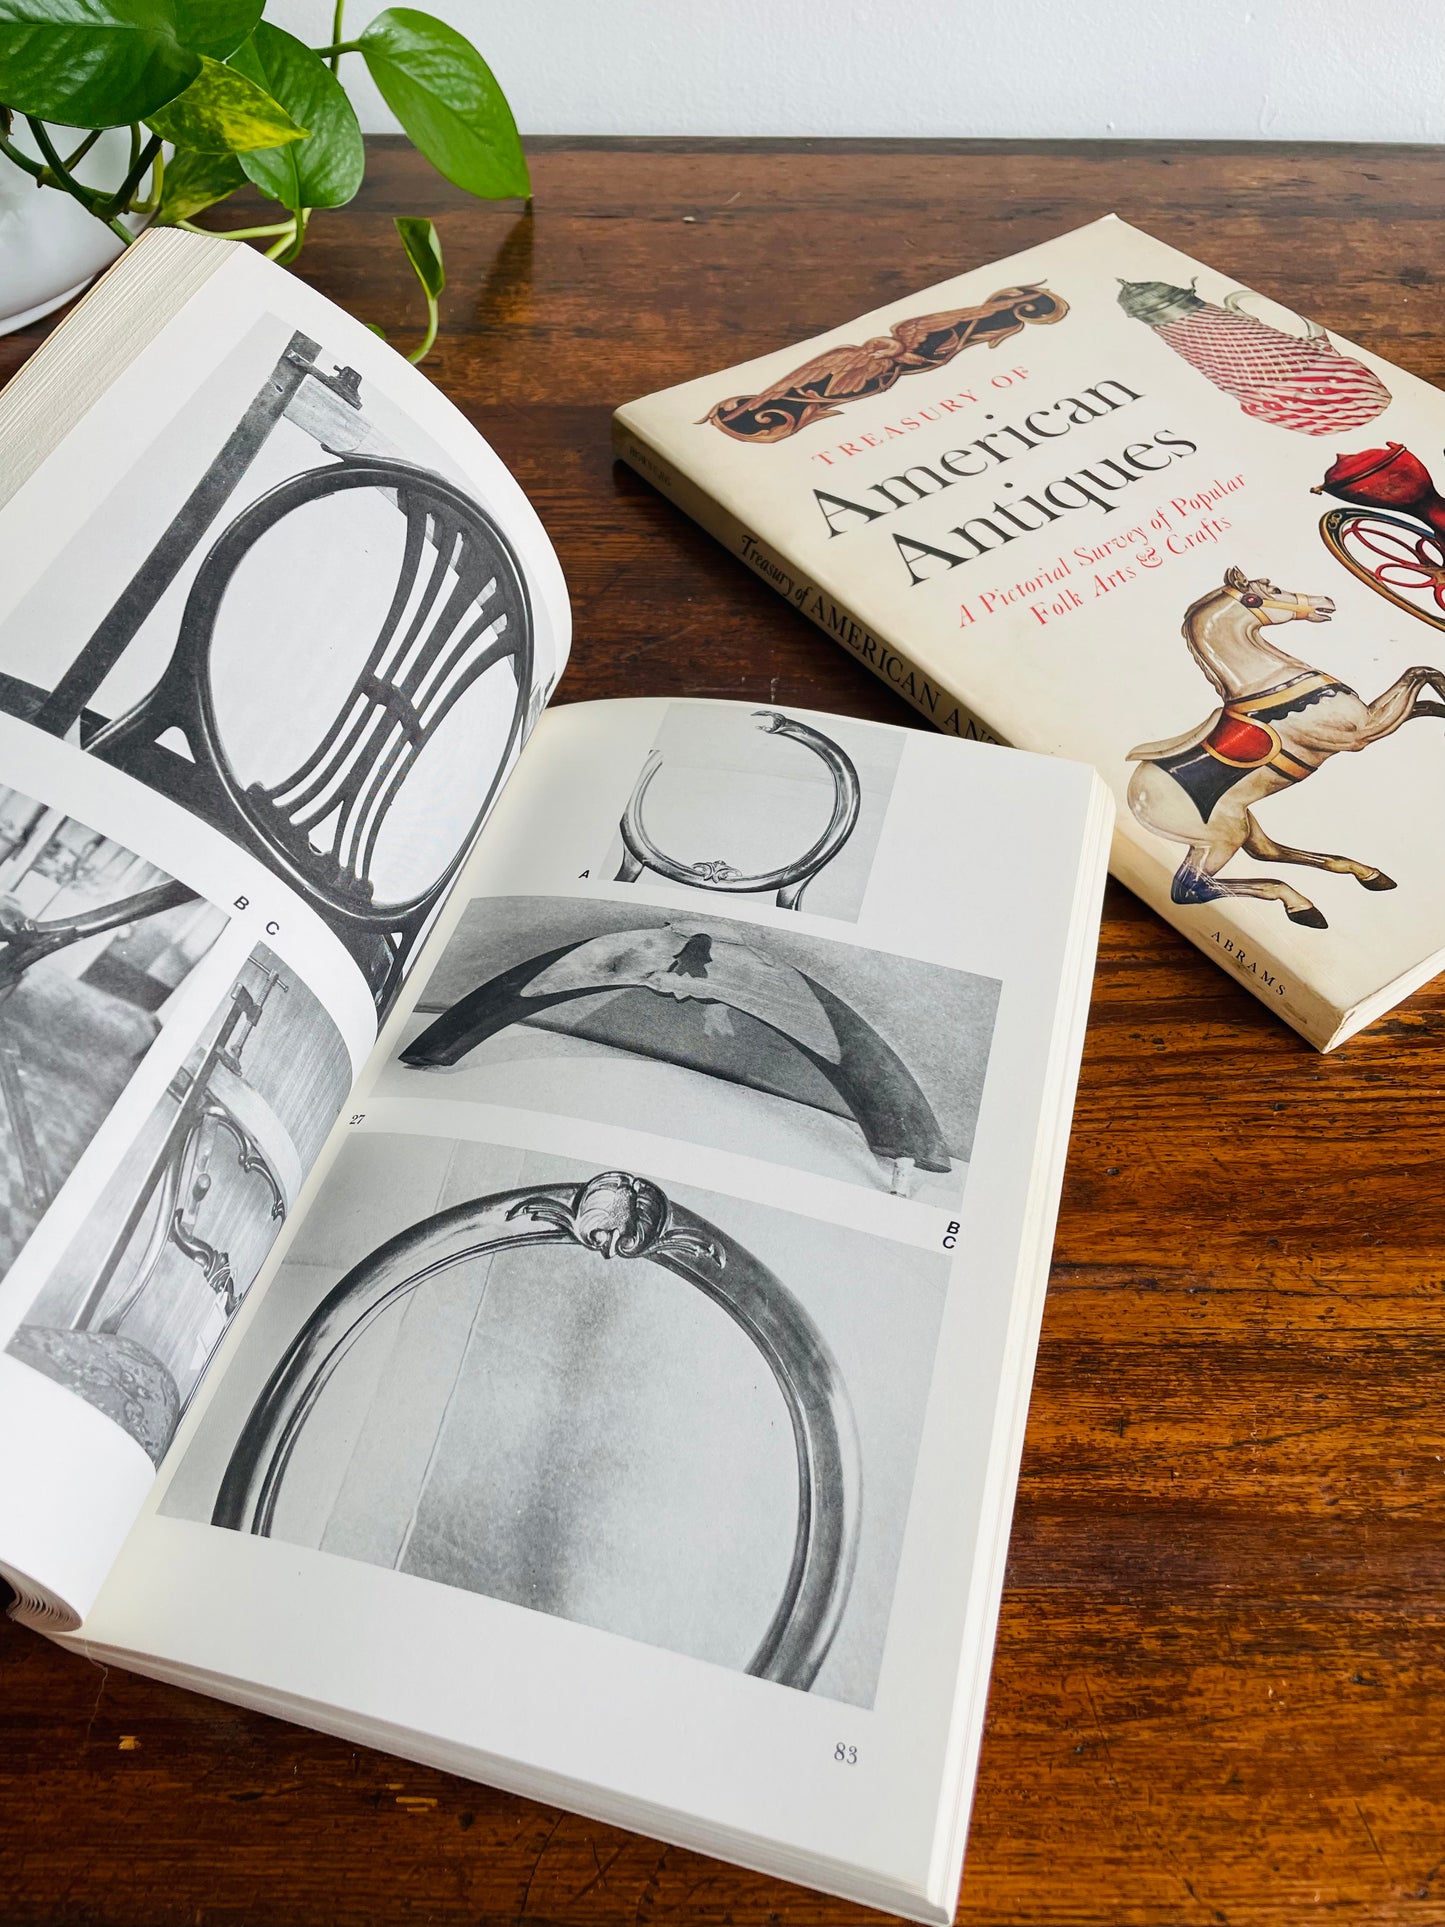 Antique Guides Vintage Book Bundle - American Antiques, Antique Furniture Restoration